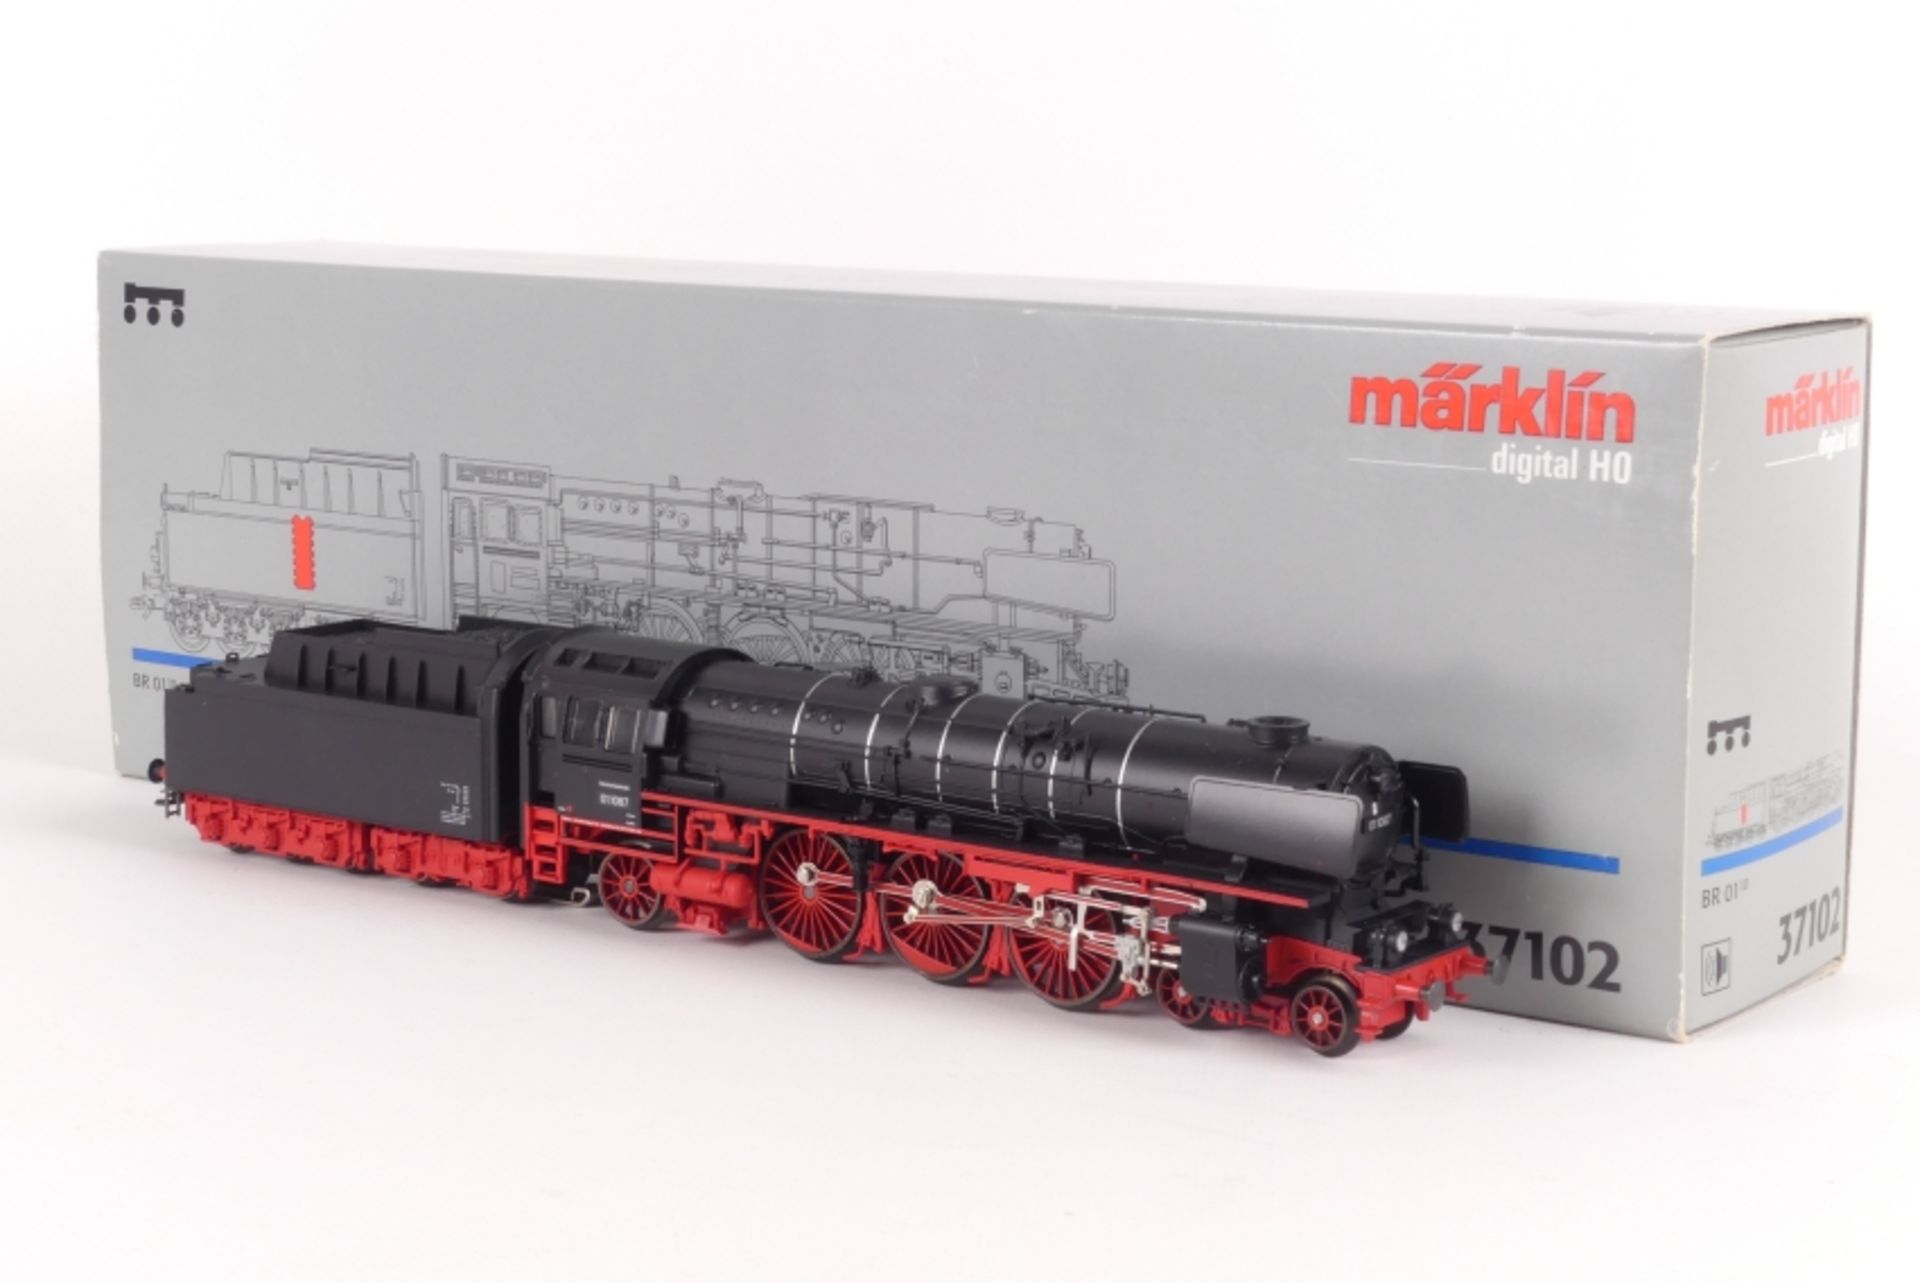 Märklin 37102, Dampflok "01 1087" der Bundesbahn, Digital-*-Technik, Sound, sehr gut erhalten, ORK